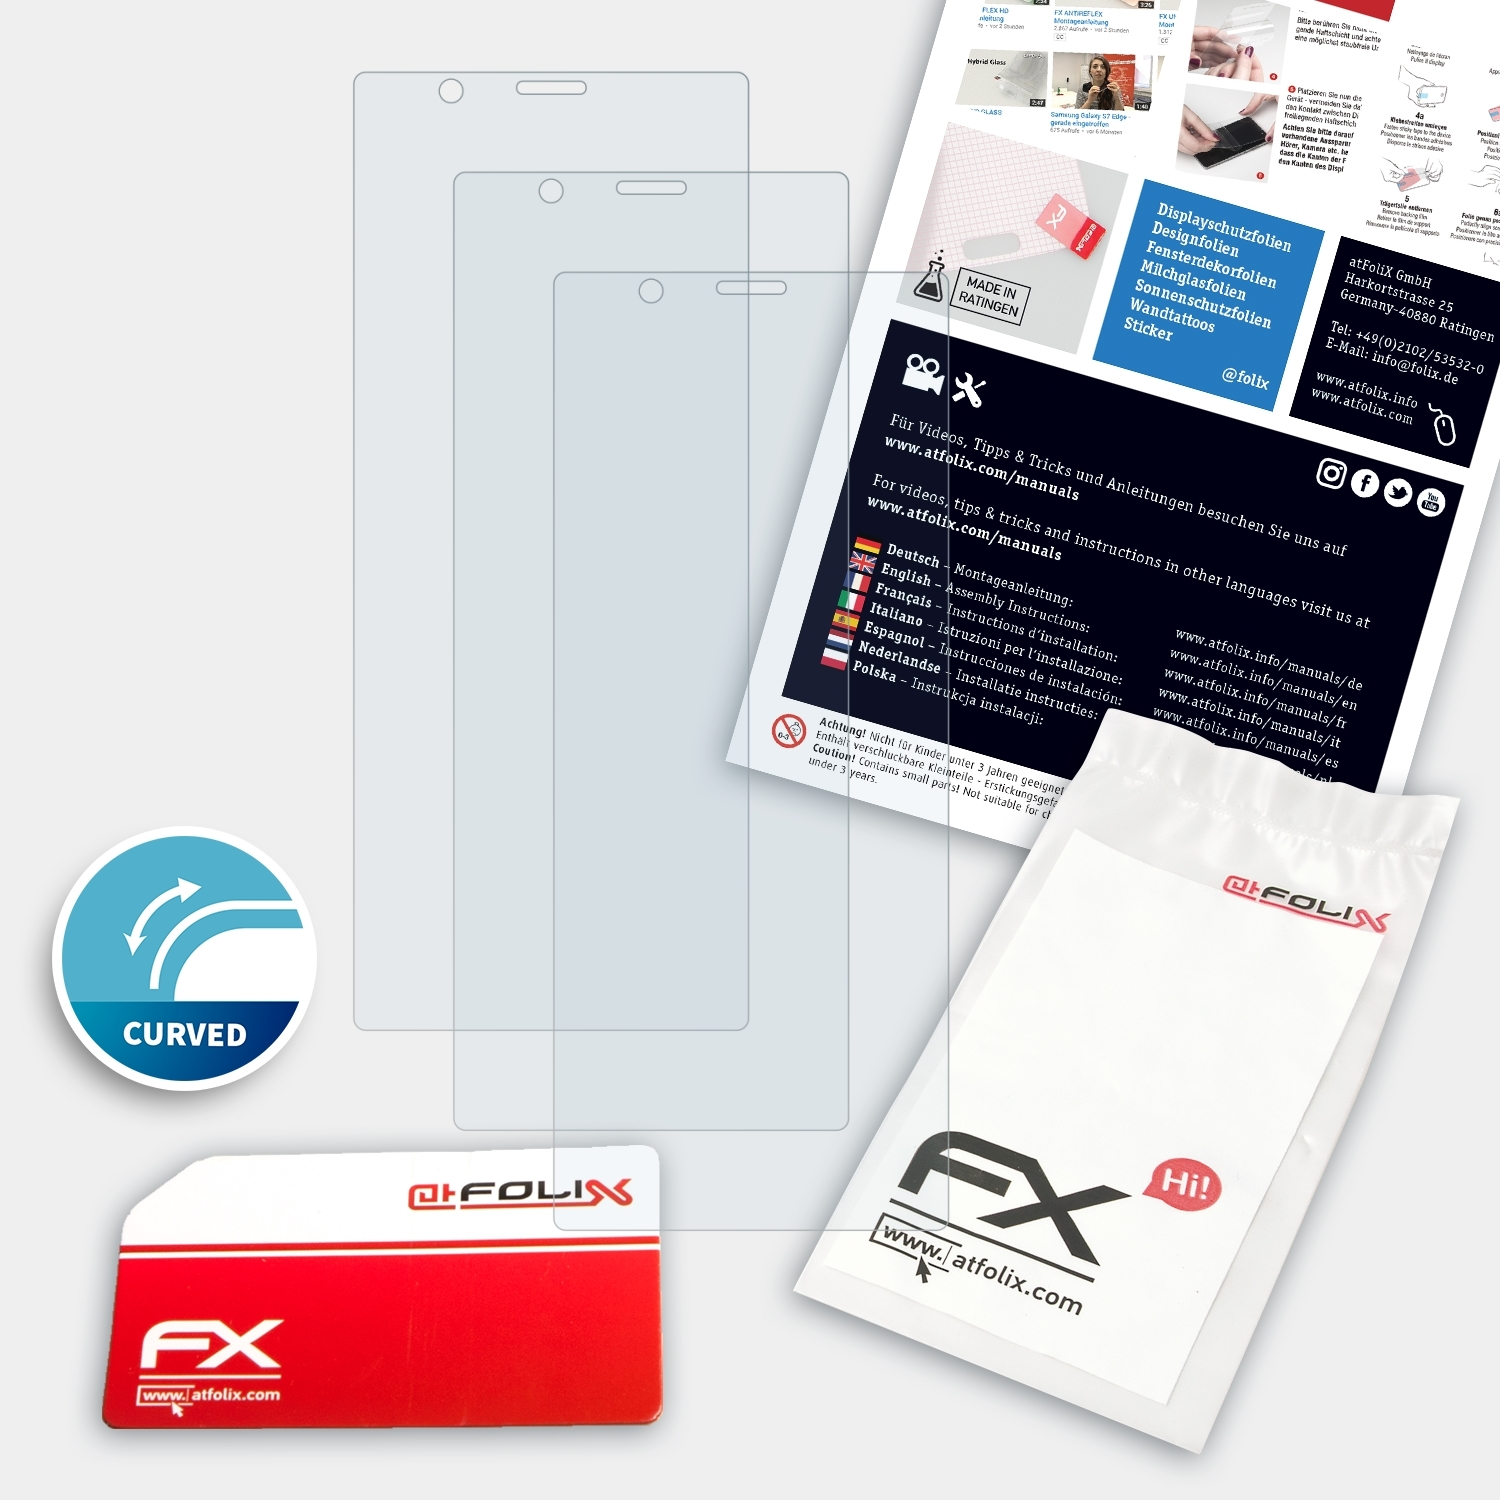 FX-ActiFleX Xperia Displayschutz(für ATFOLIX 5) Sony 3x